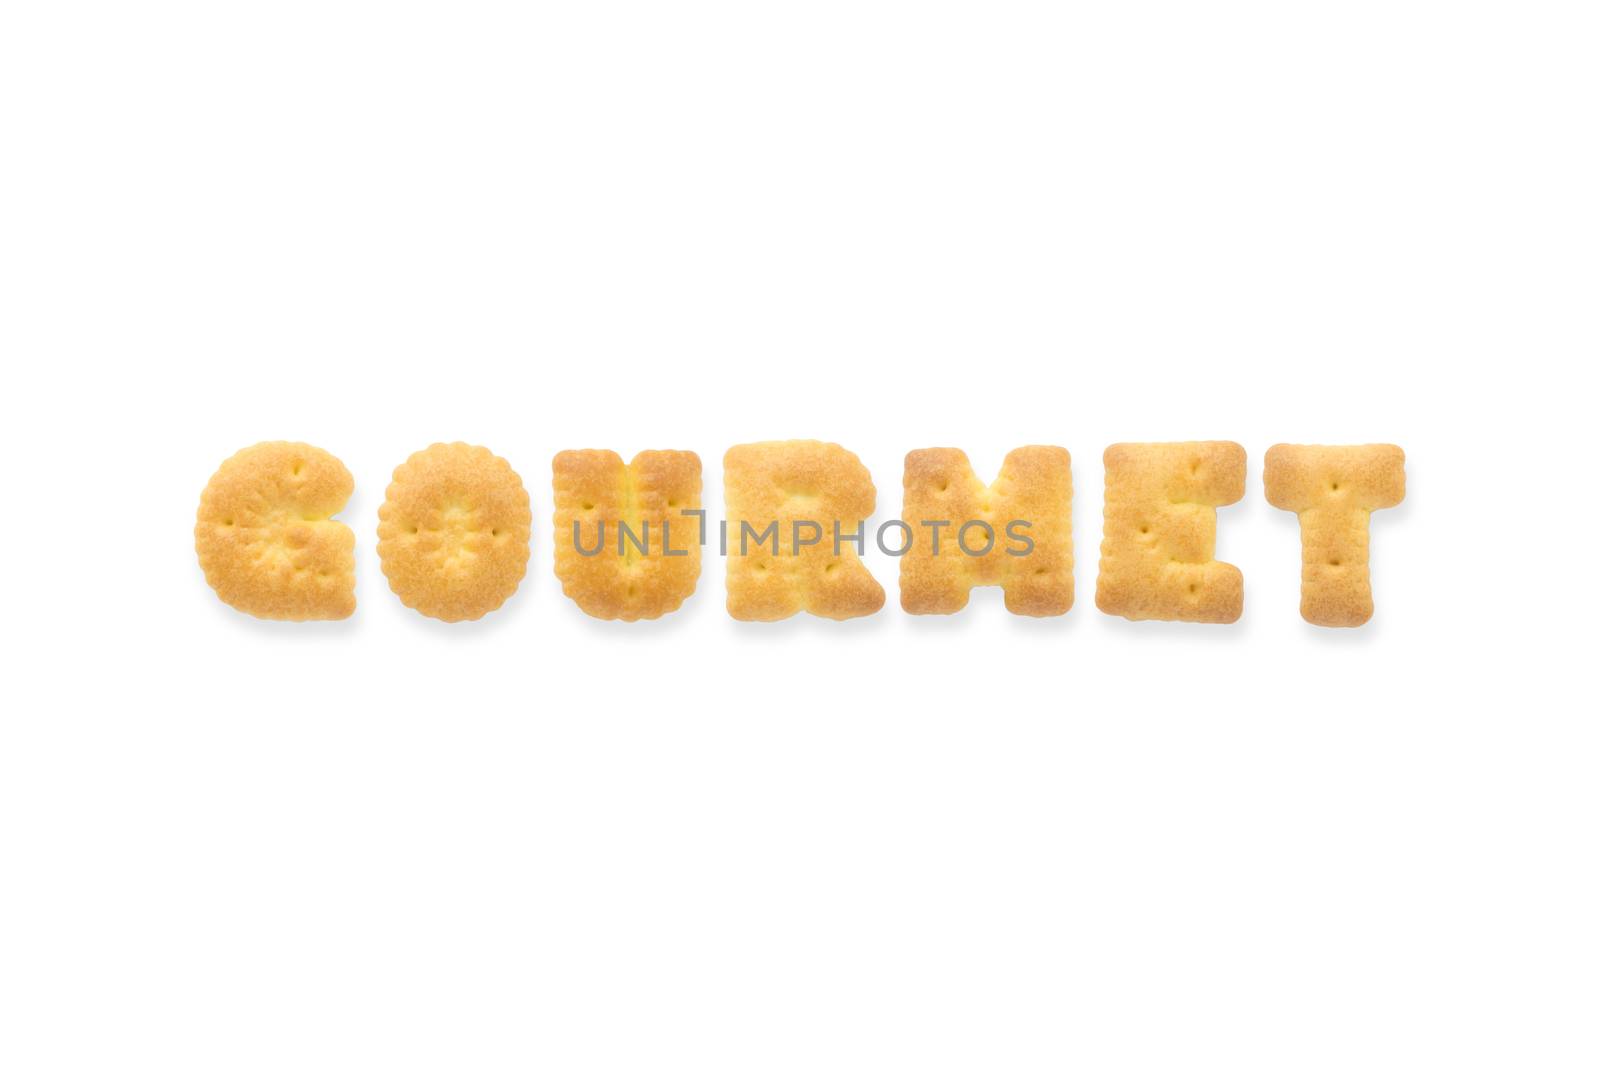 The Letter Word GOURMET Alphabet Biscuit Cracker by vinnstock